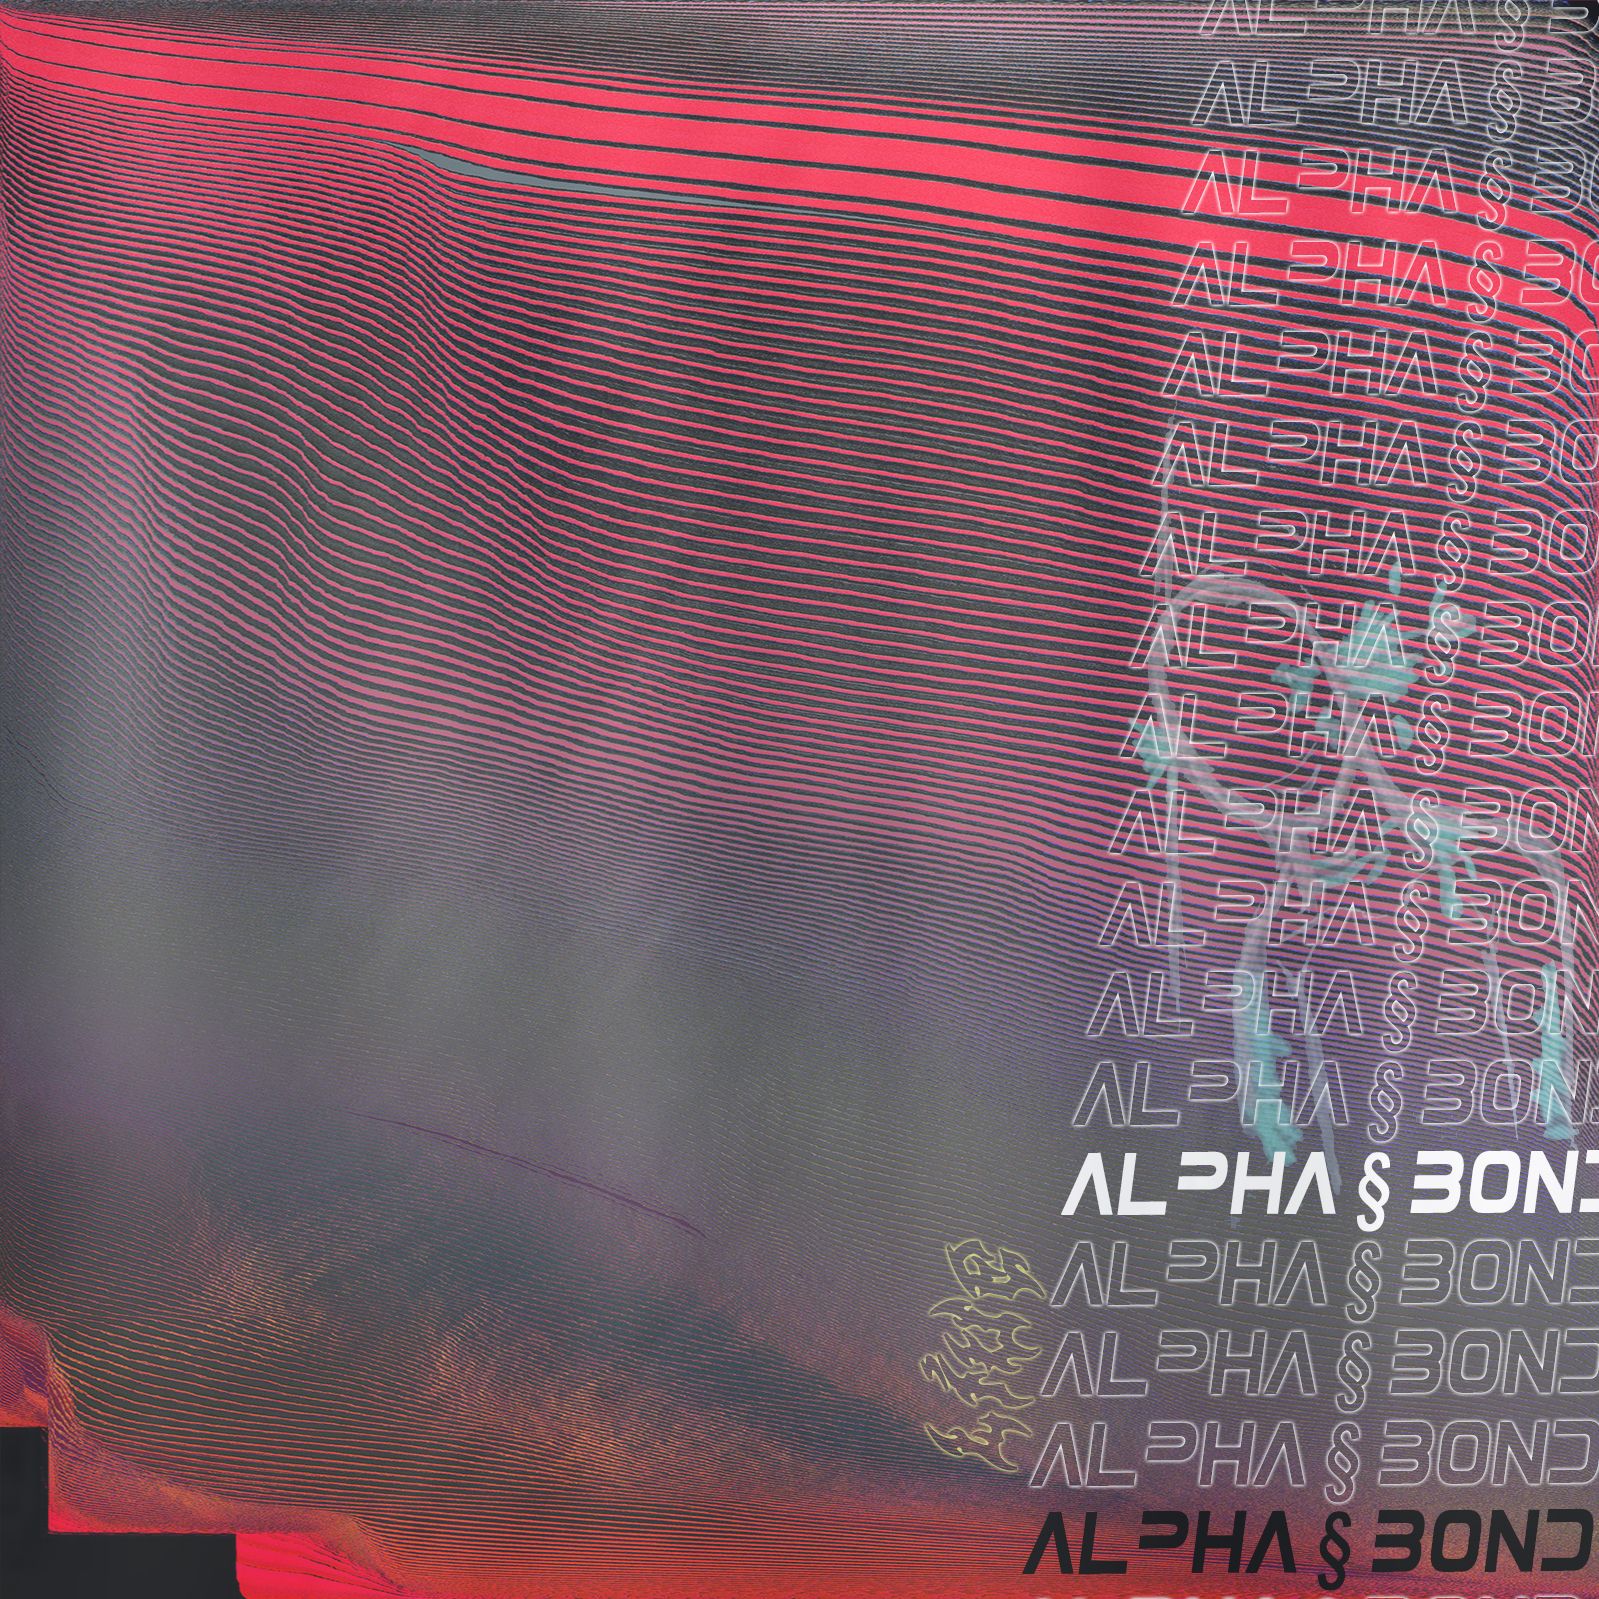 Pobierać alpha § bond